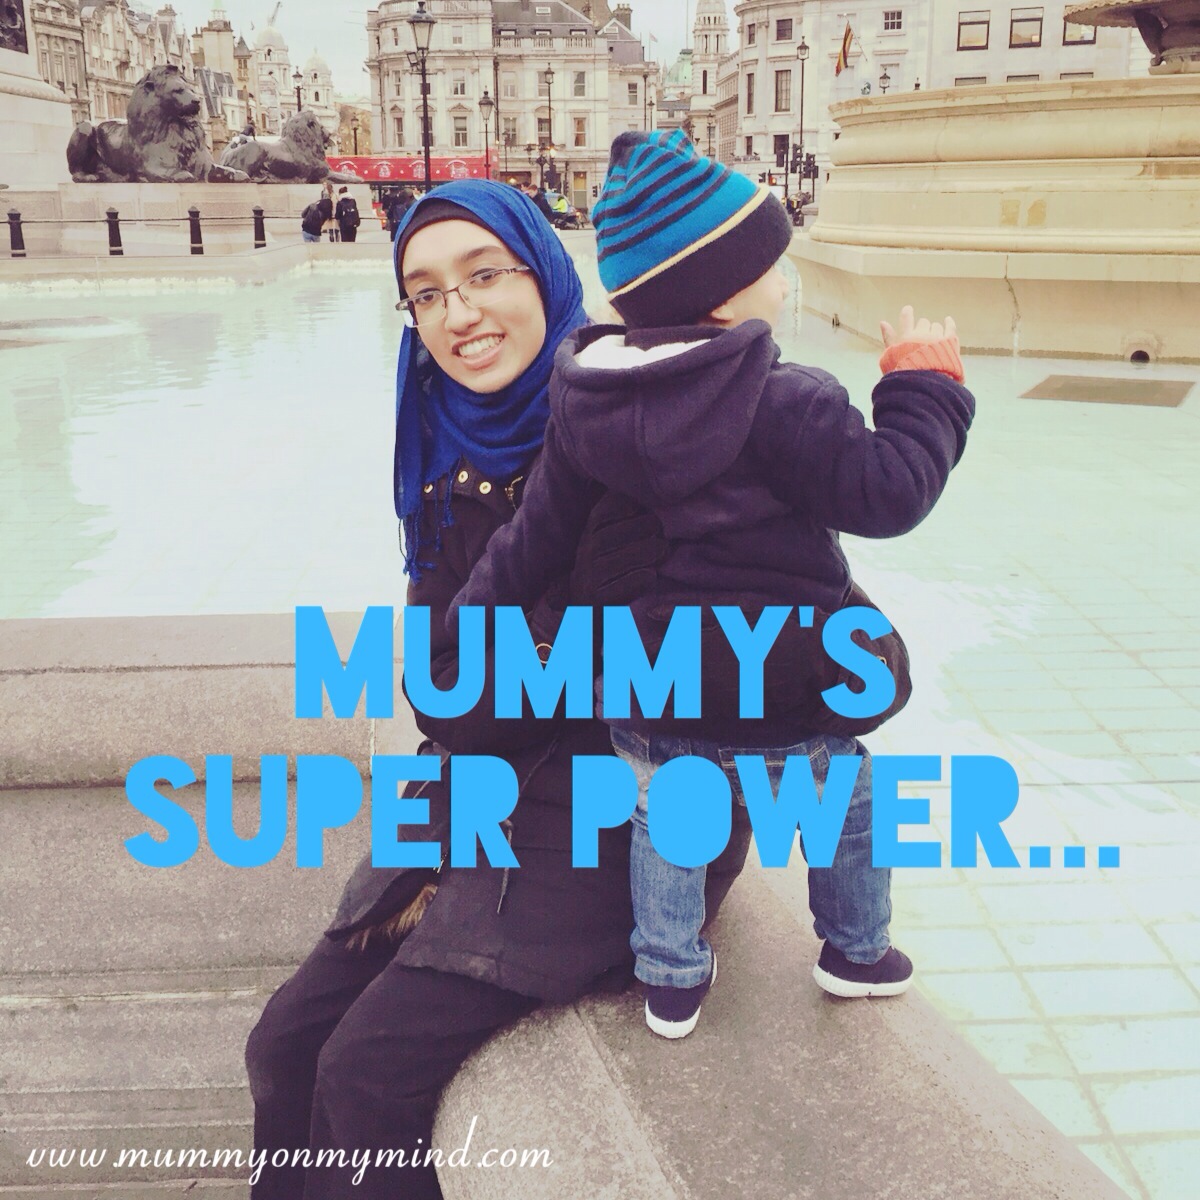 Mummy’s Super Power…